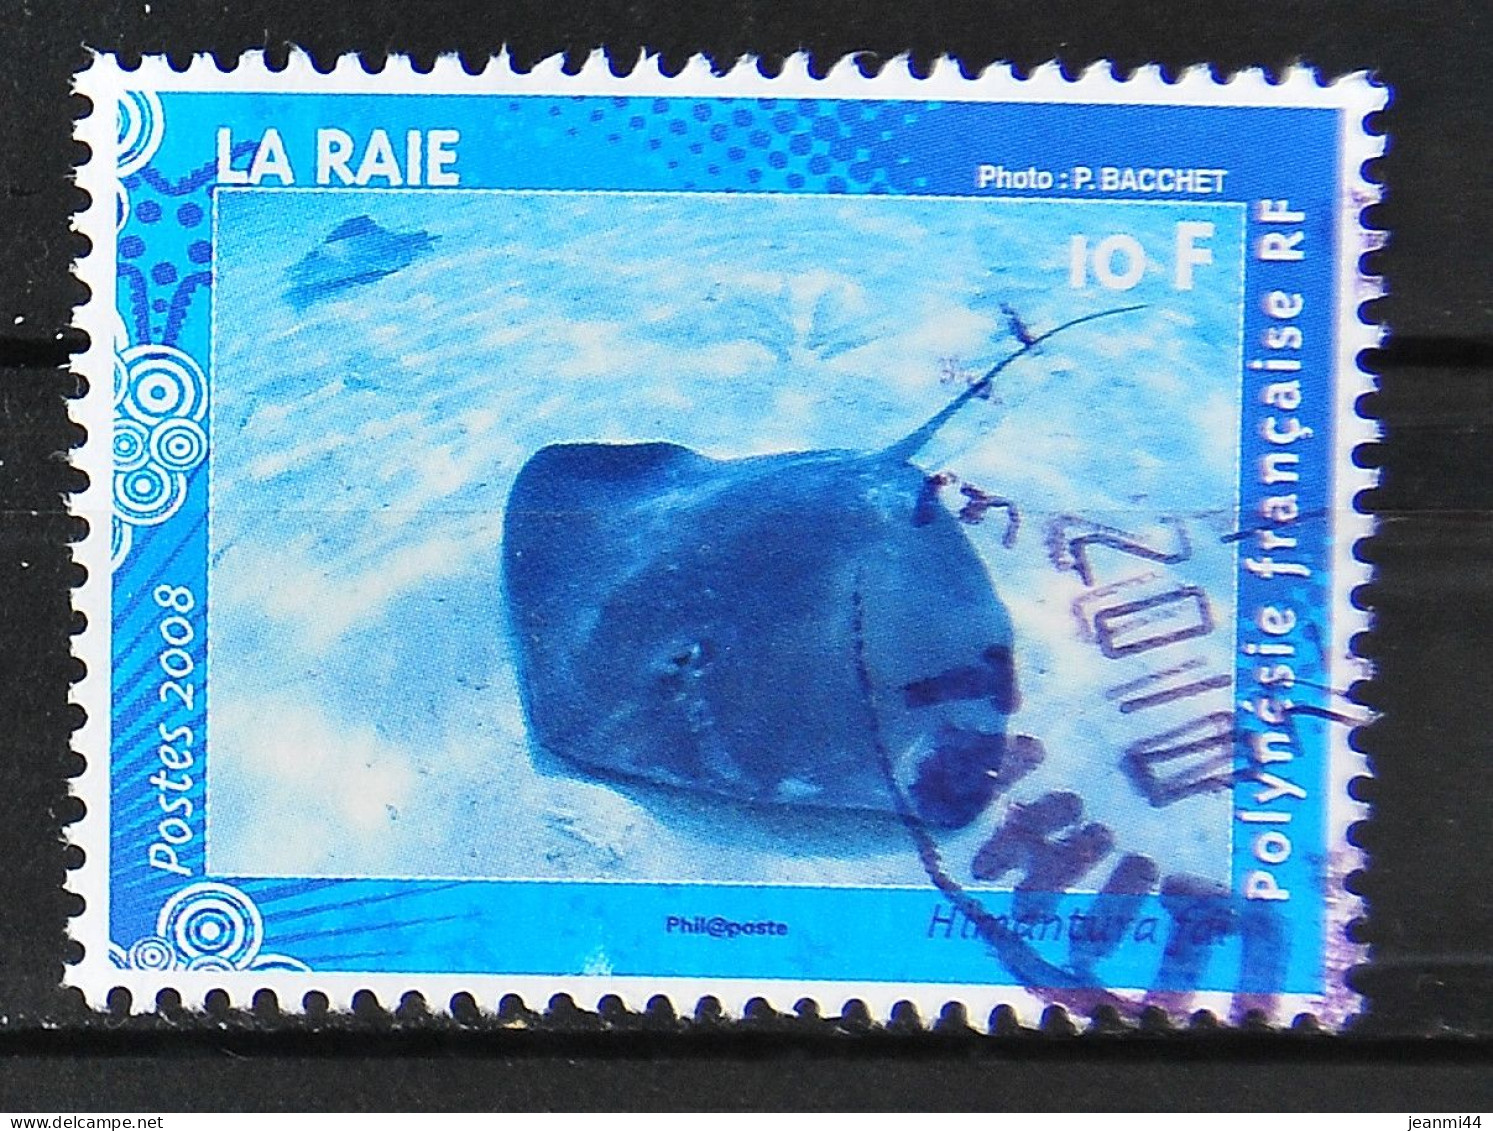 POLYNESIE FRANCAISE - 2008 - La Raie N° 824 - Cachet à Date - Used Stamps